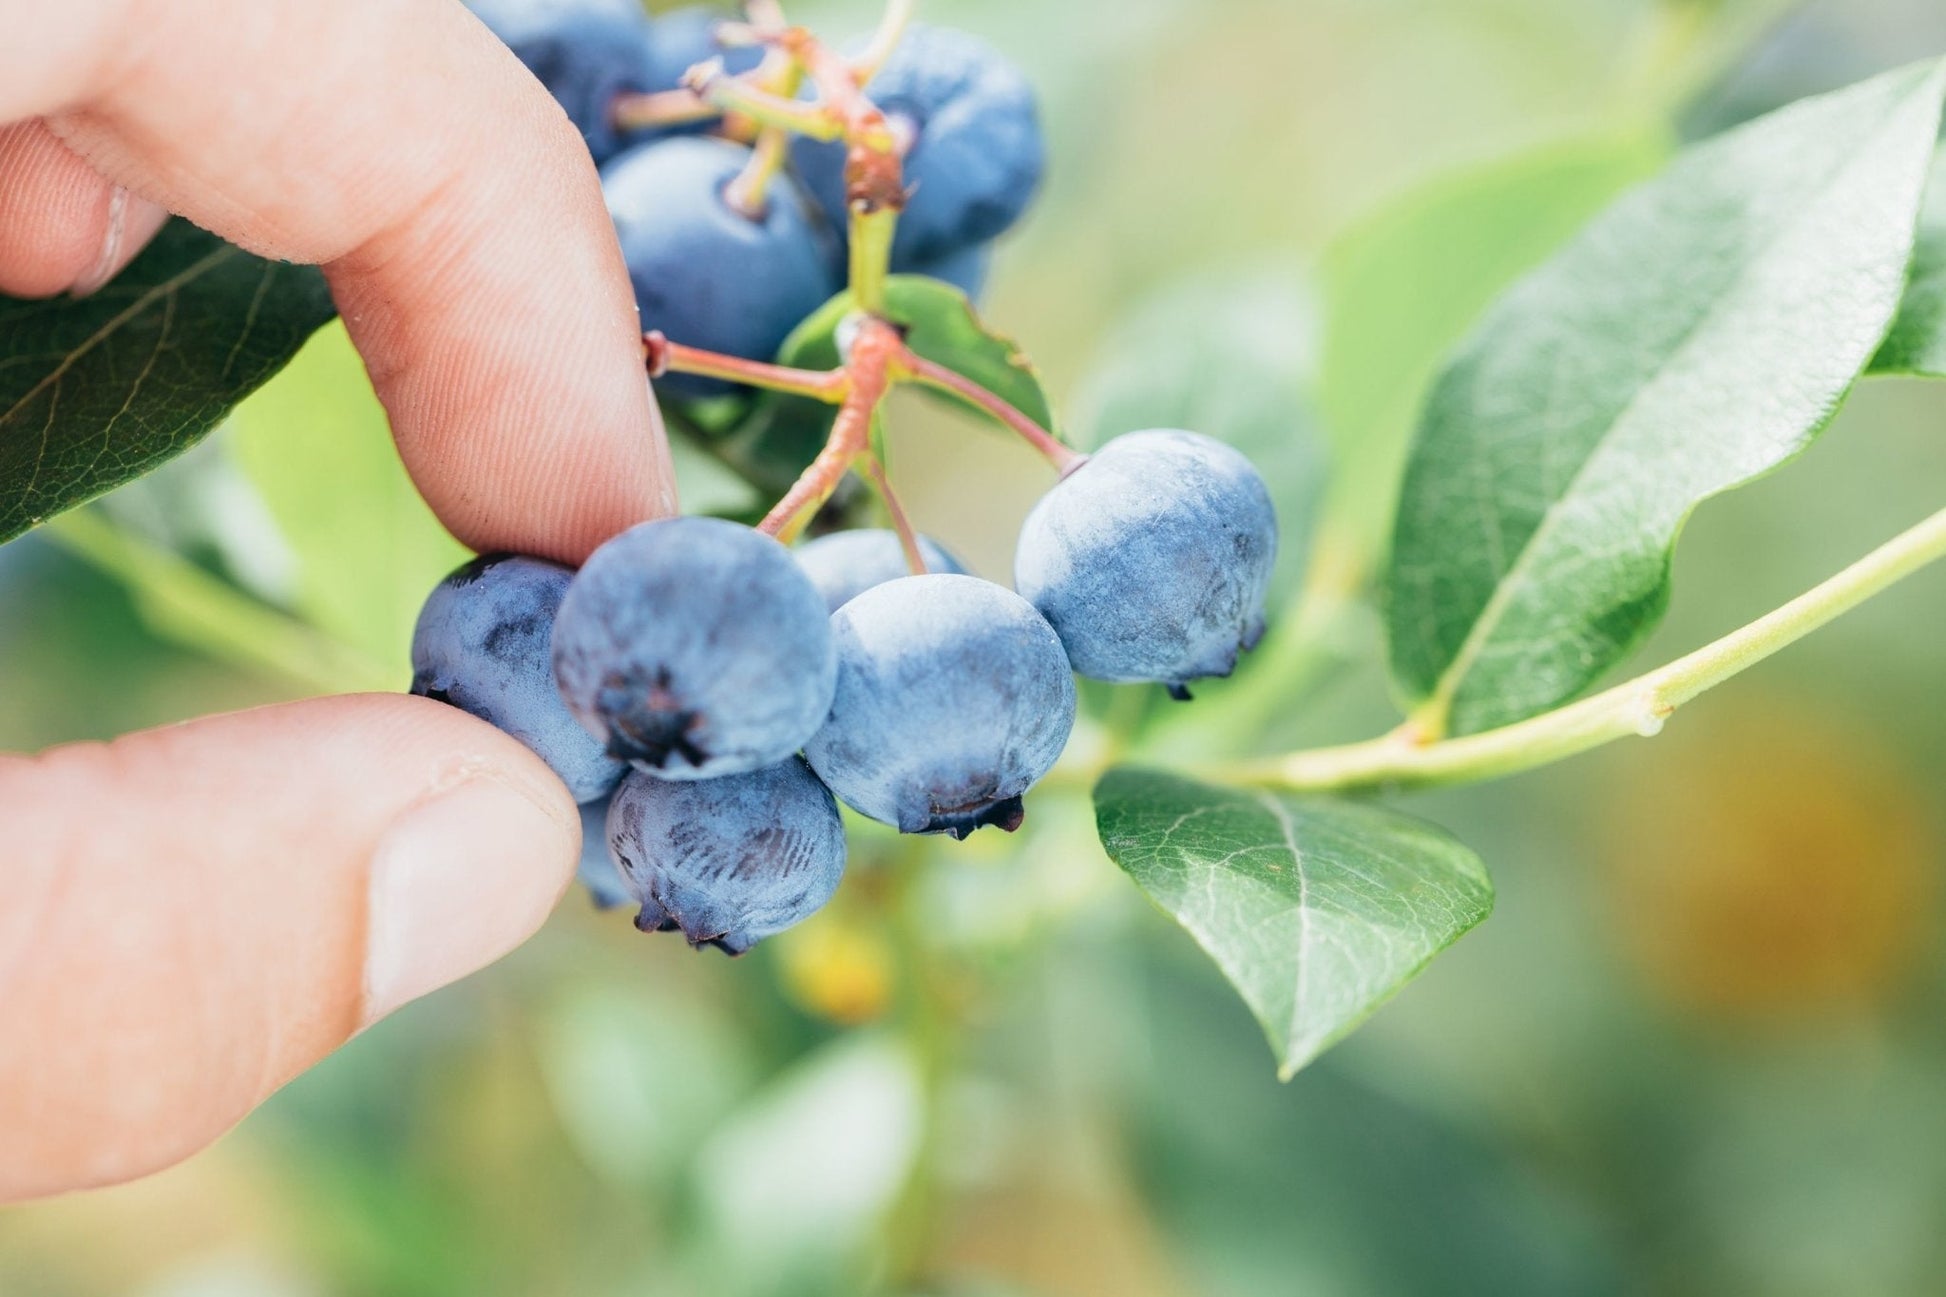 Fruit Plants - Blueberry 'Sunshine Blue' - 1 x Full Plant in a 2 Litre Pot - AcquaGarden